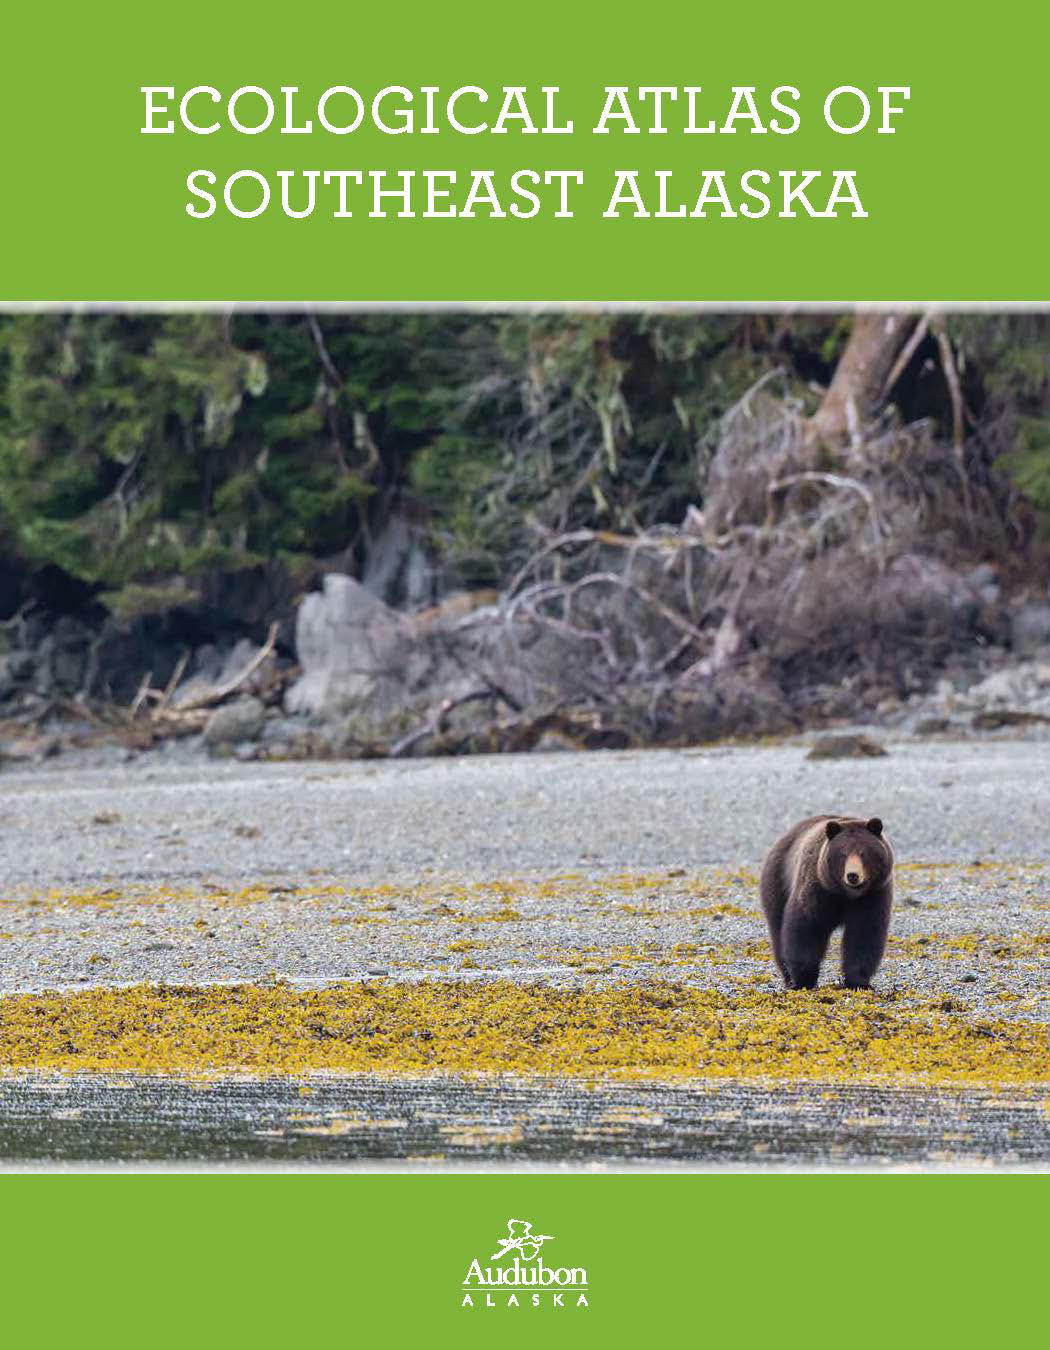 Southwest Alaska Salmon Habitat Partnership